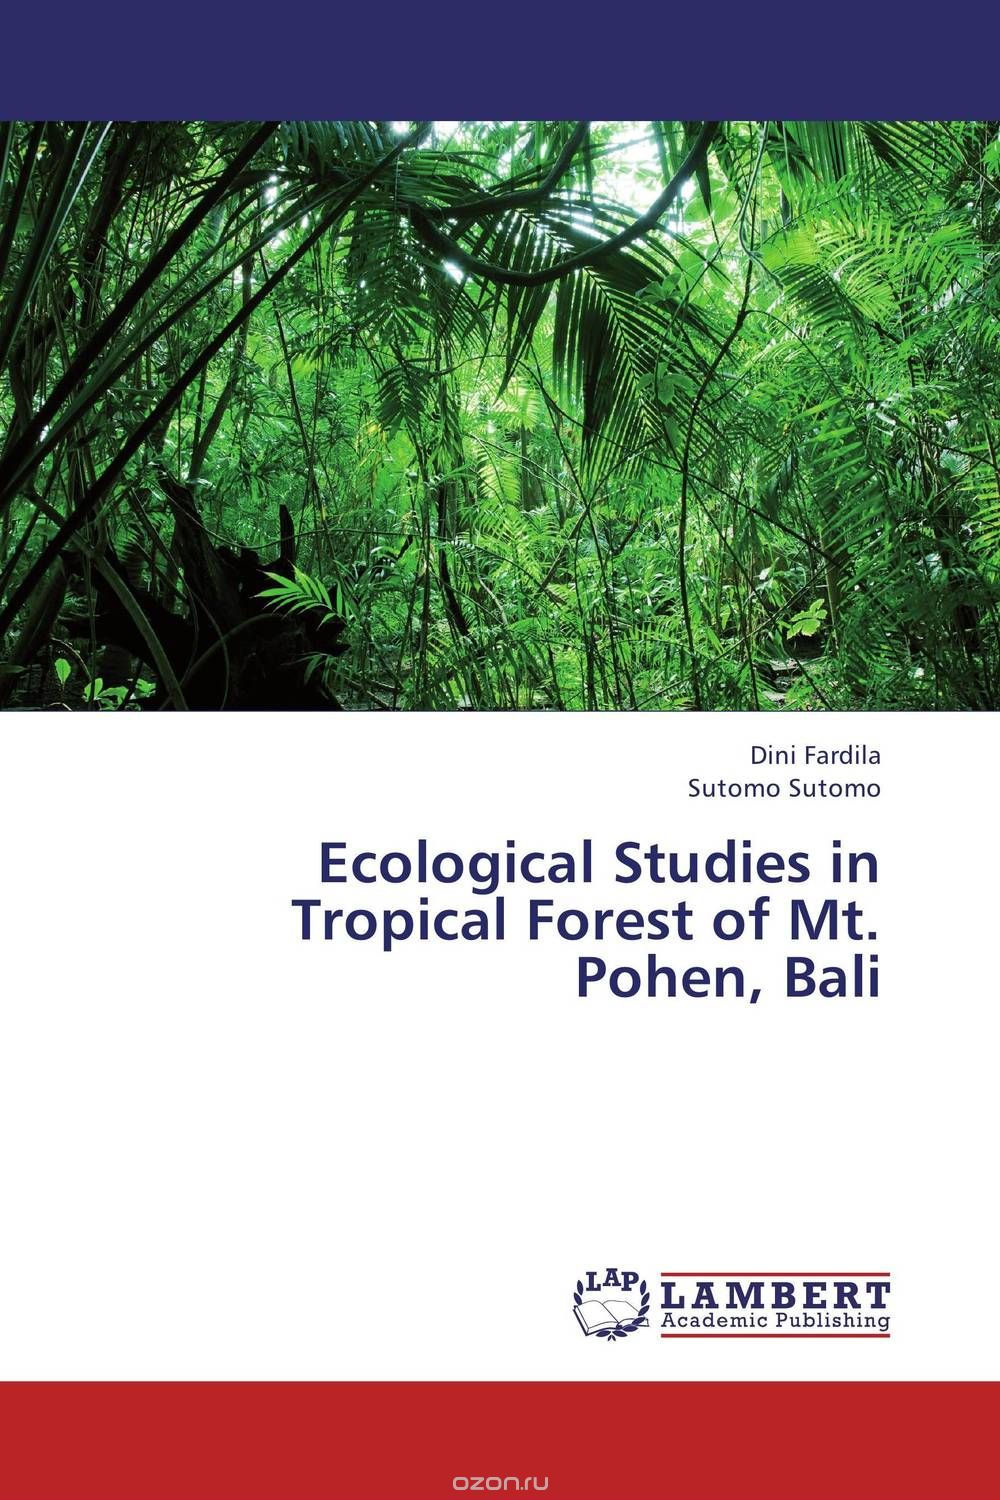 Скачать книгу "Ecological Studies in Tropical Forest of Mt. Pohen, Bali"